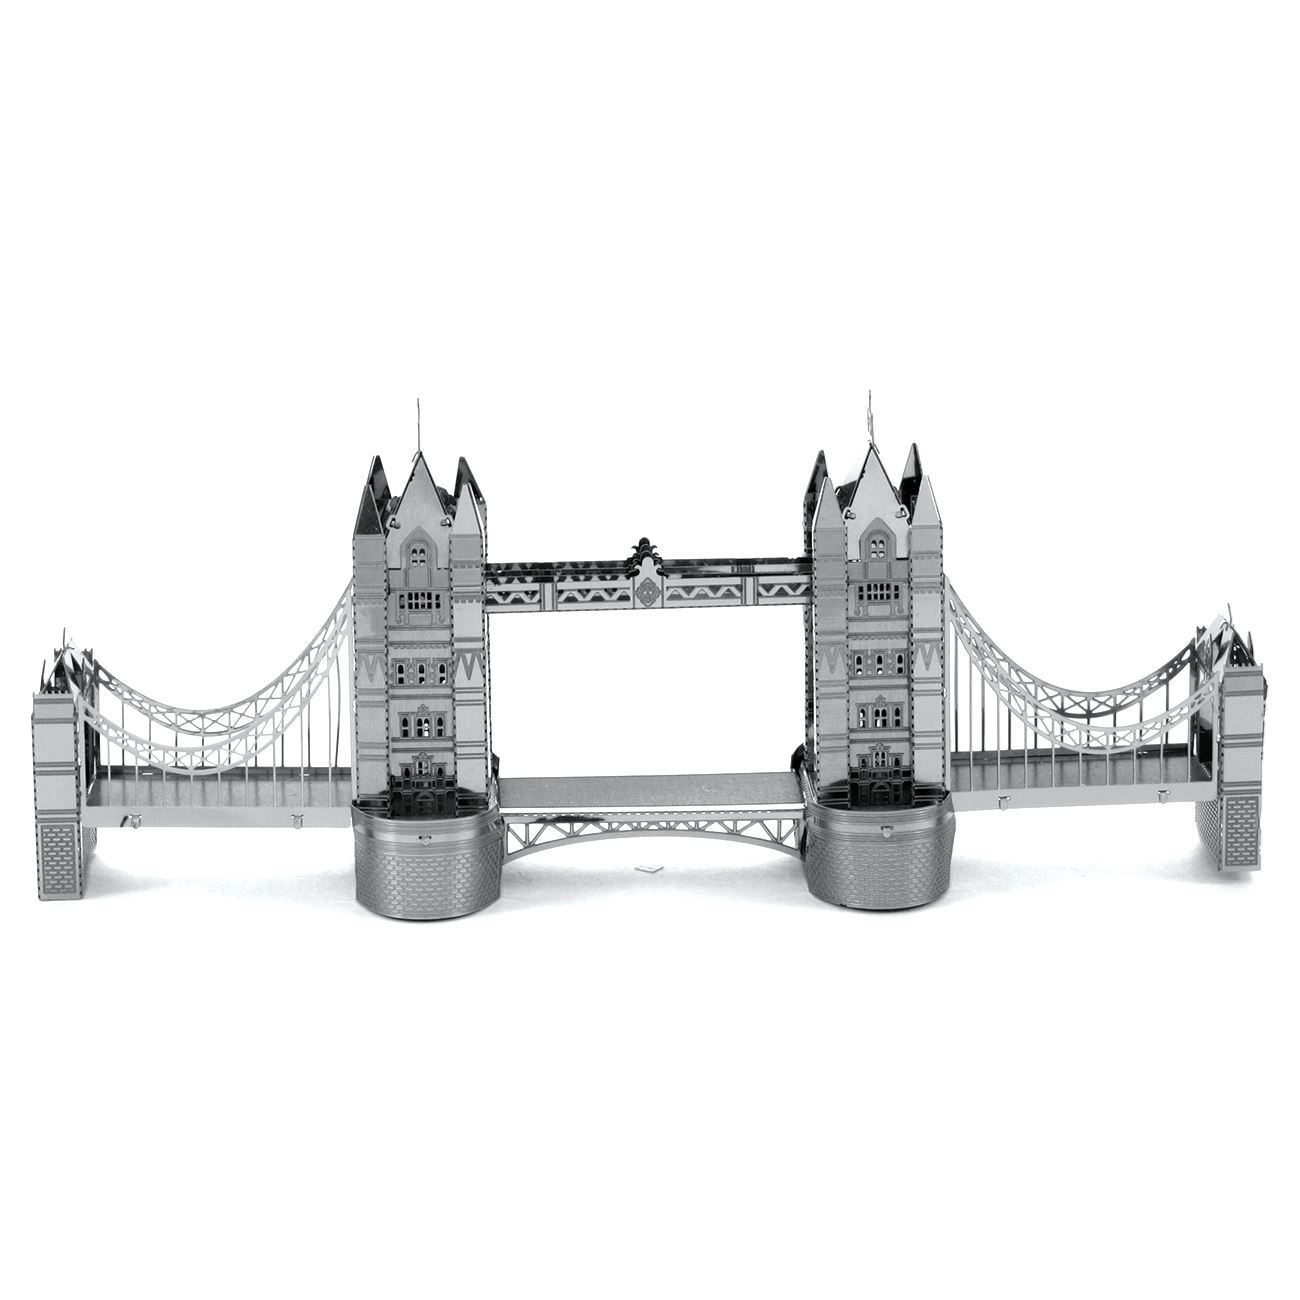 Metal Earth -Tower Bridge